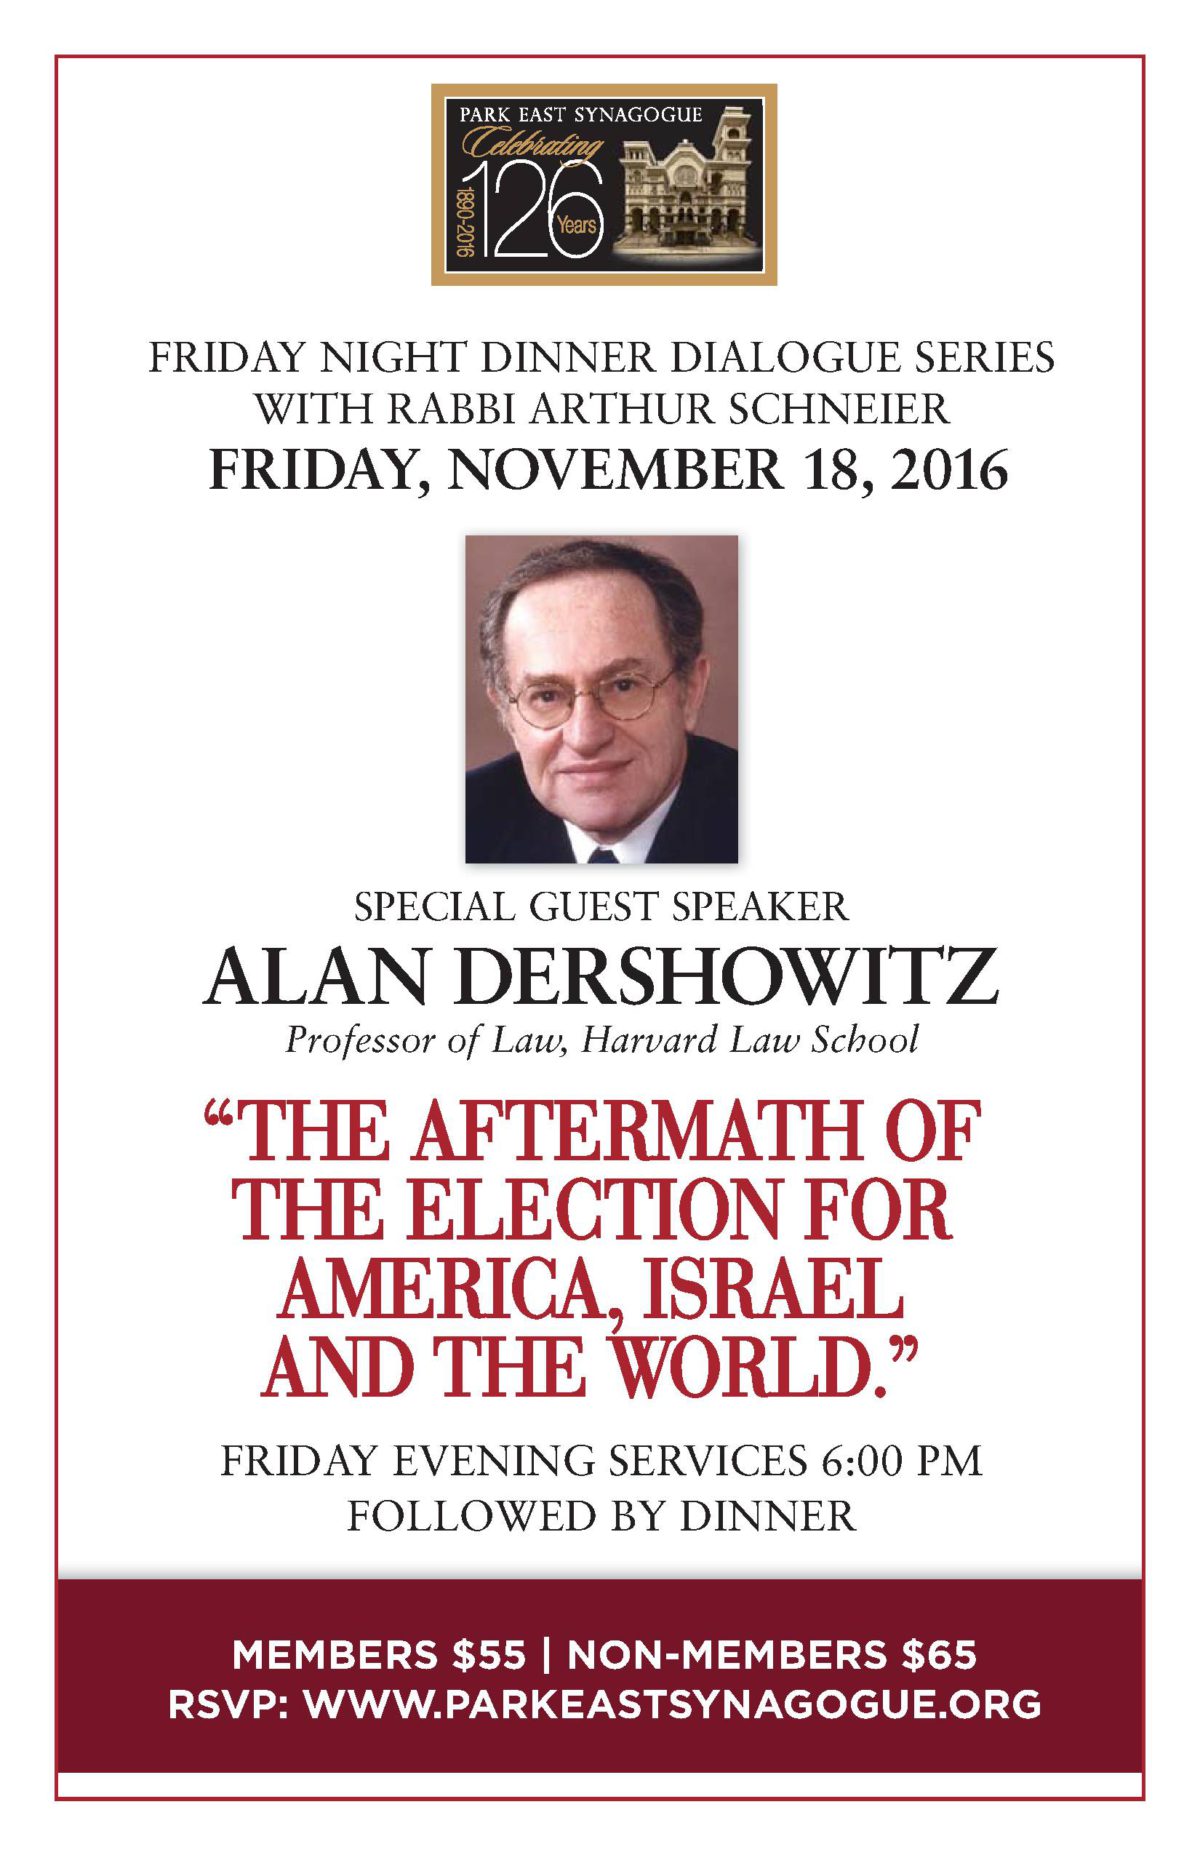 Cancel Culture by Alan M. Dershowitz